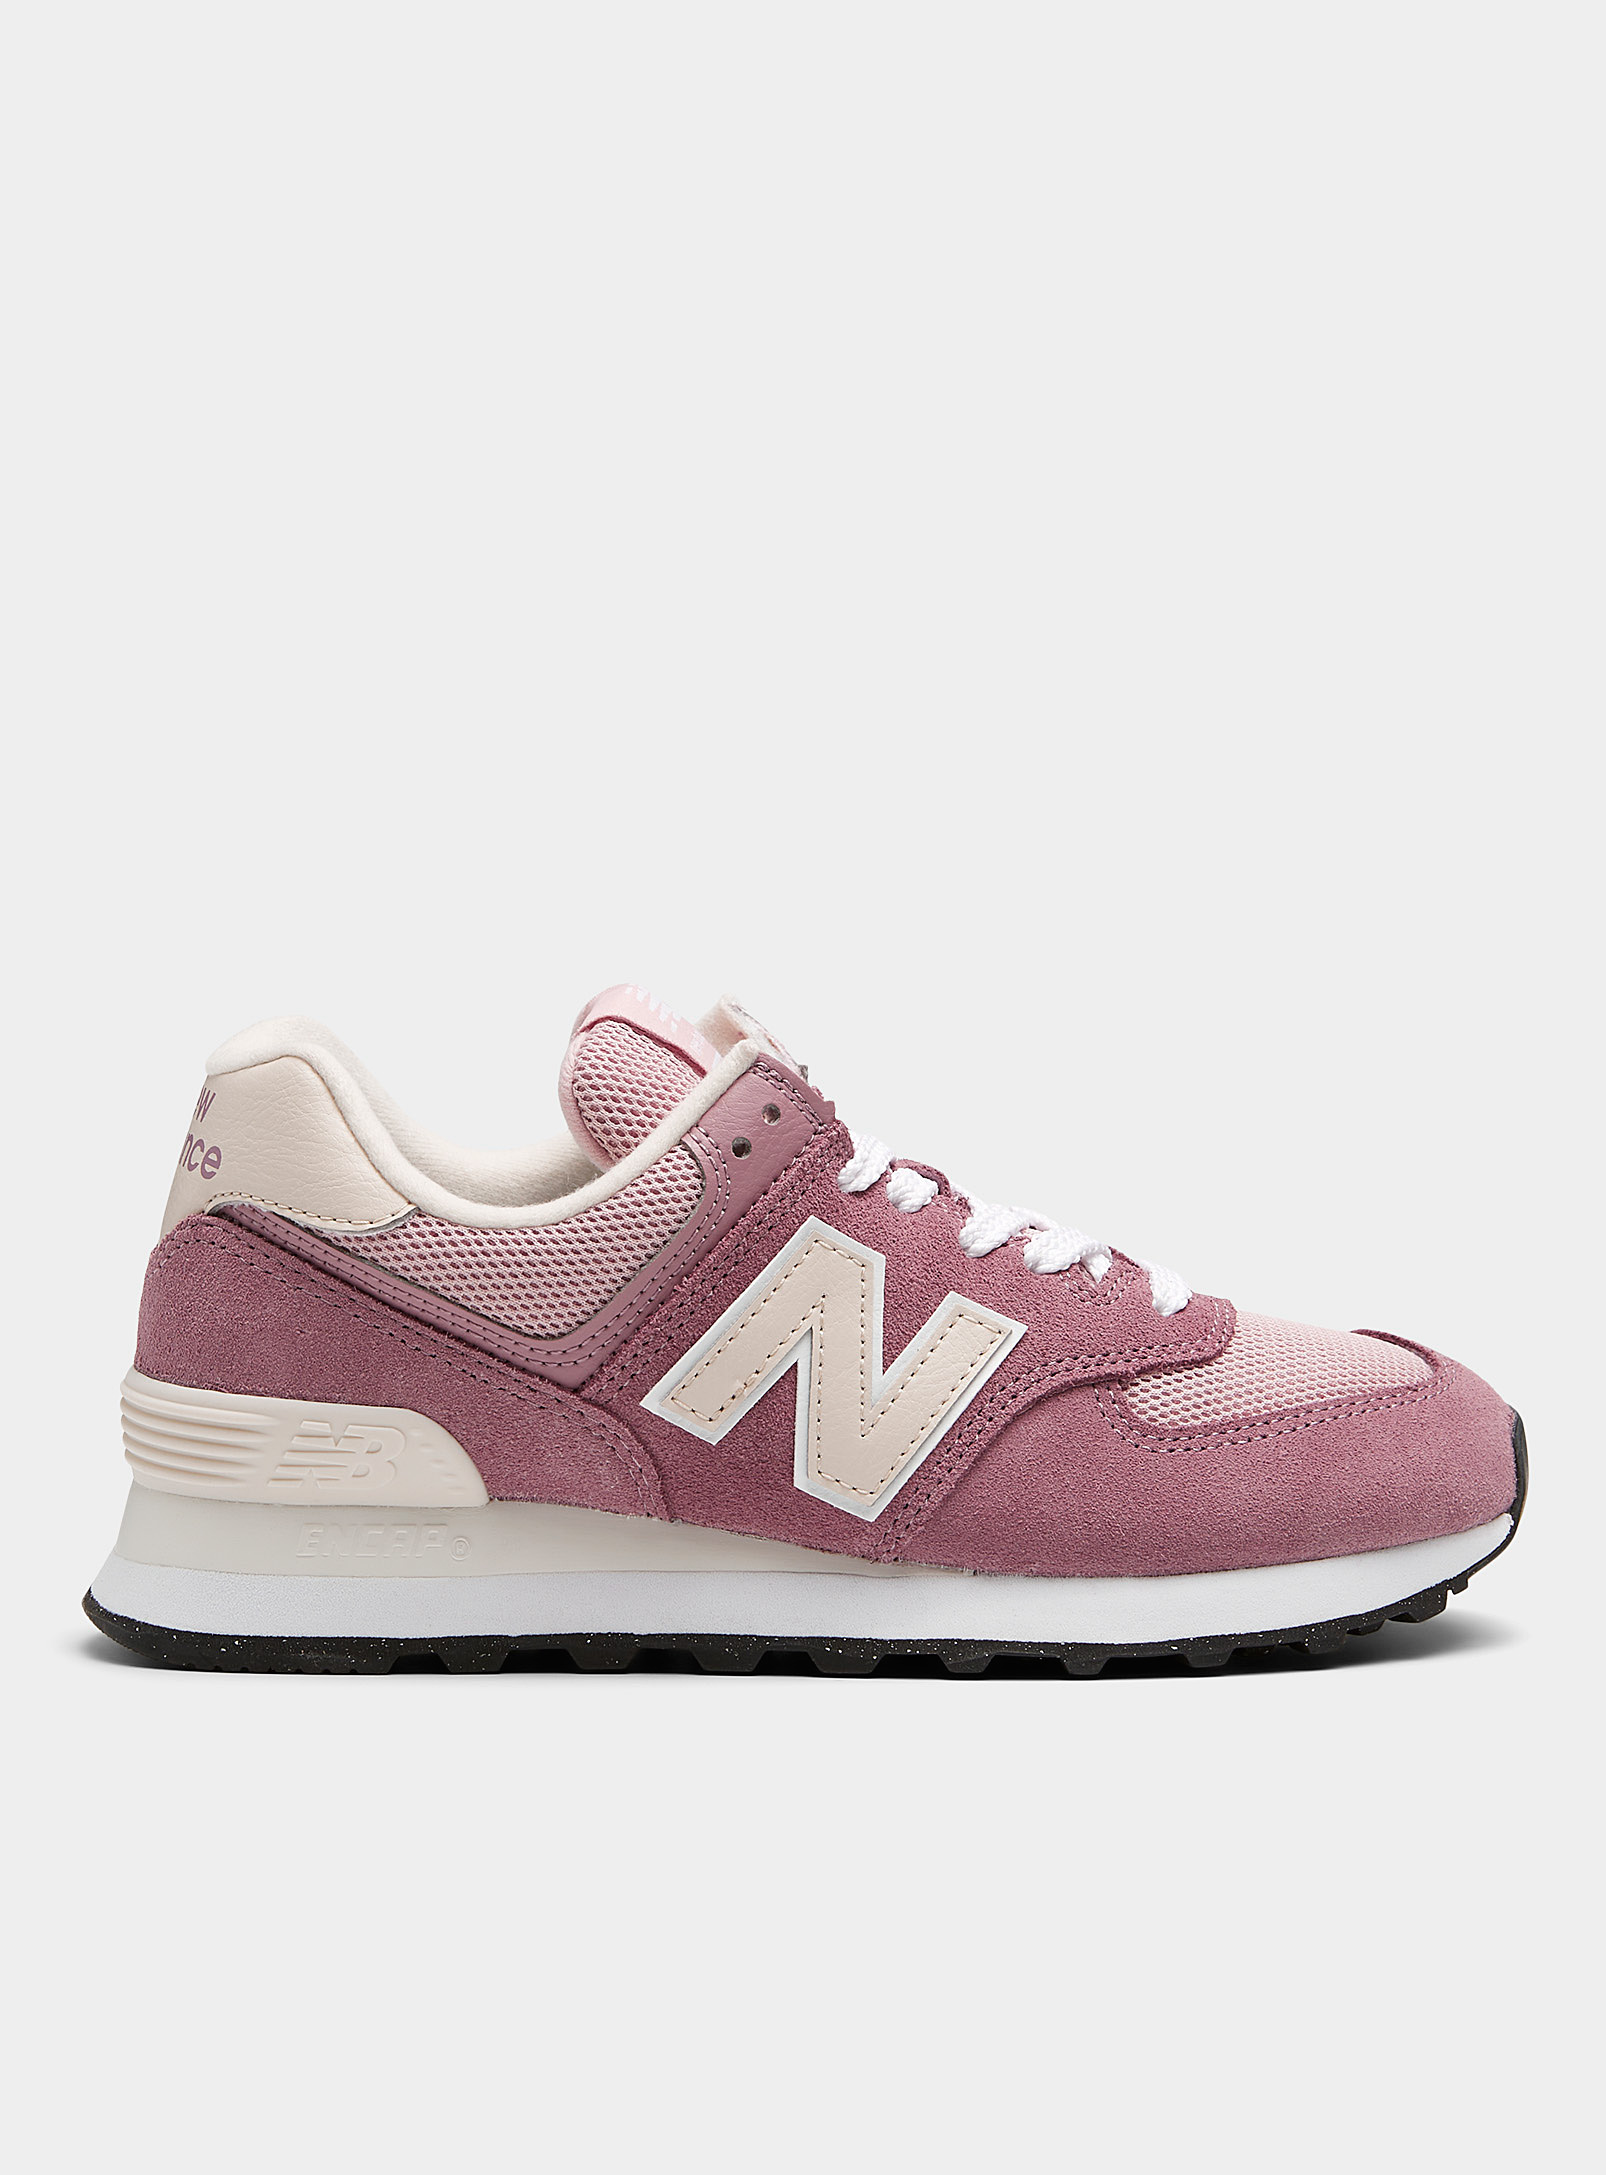 New Balance - Women's 574 pink sneakers Women